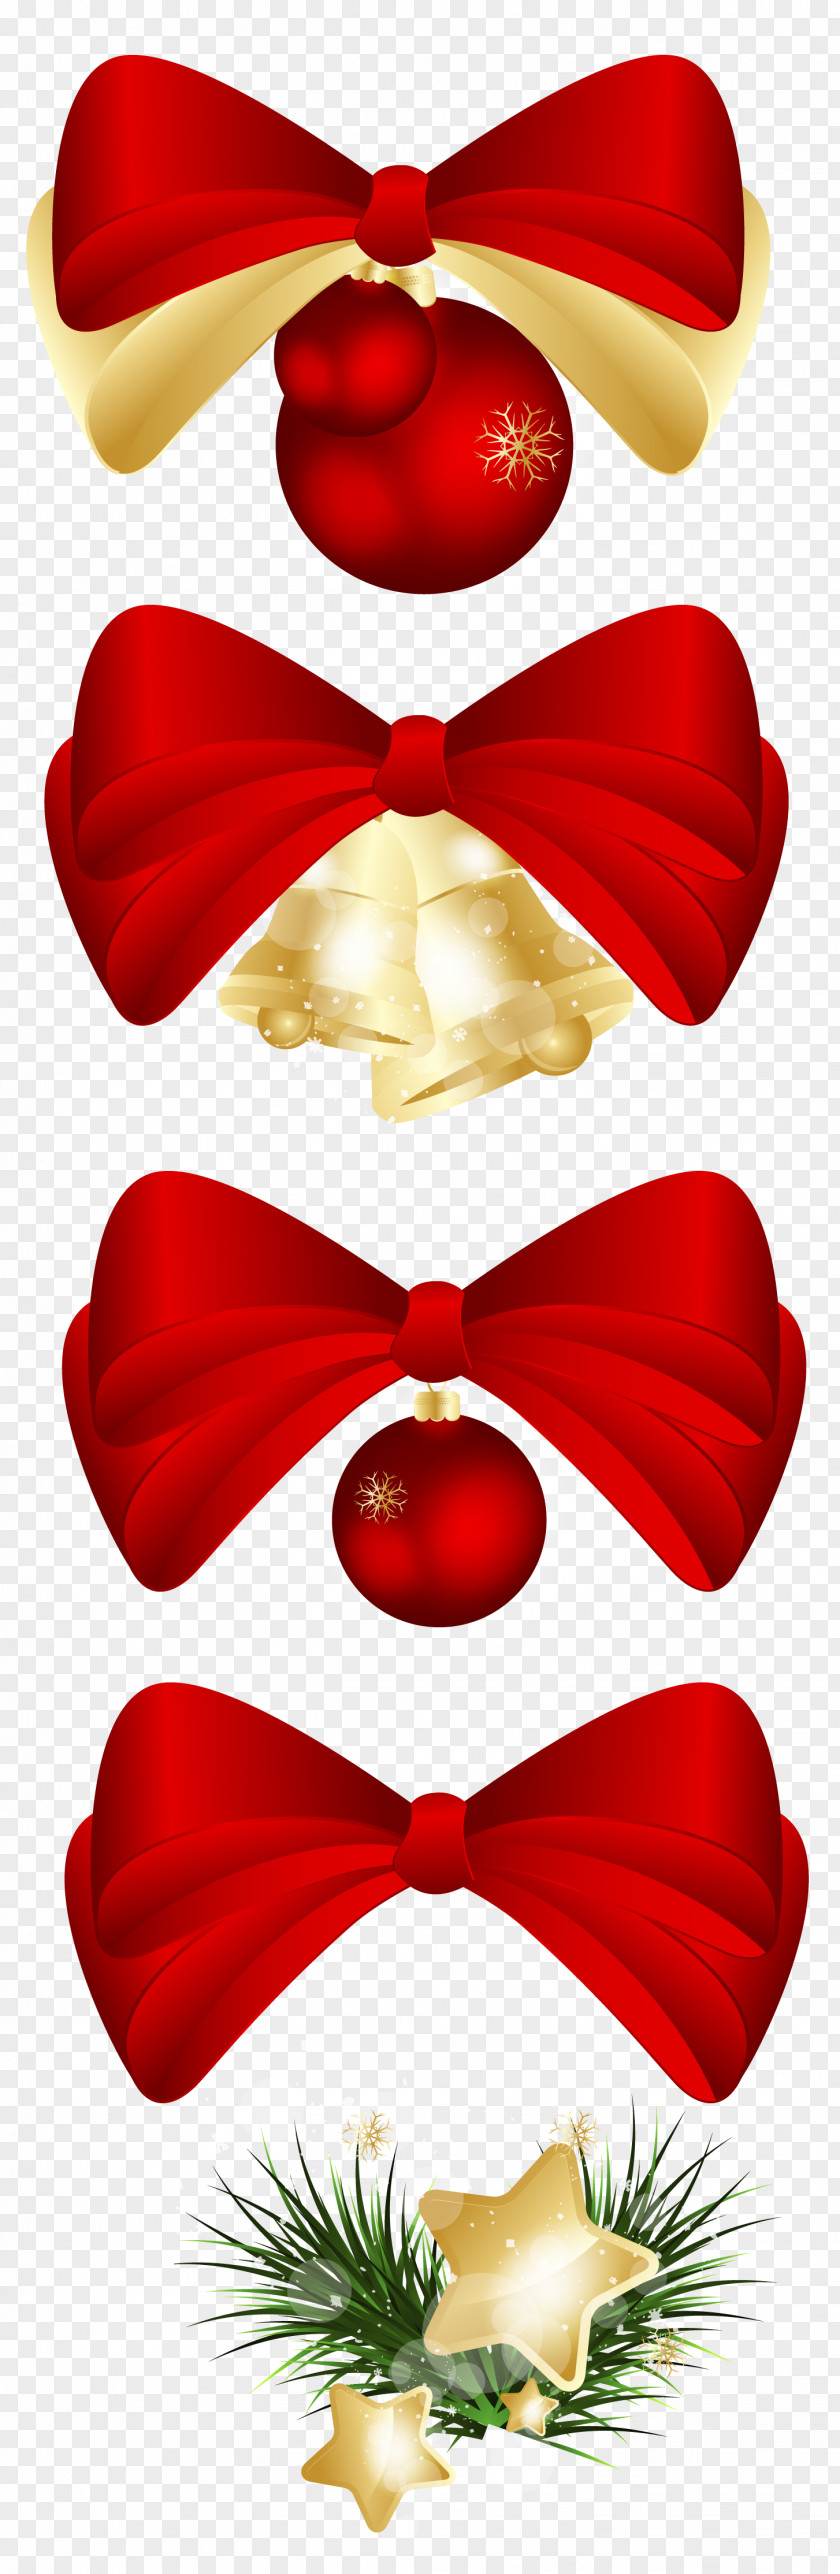 Christmas Ornament Collection Clipart Decoration Clip Art PNG